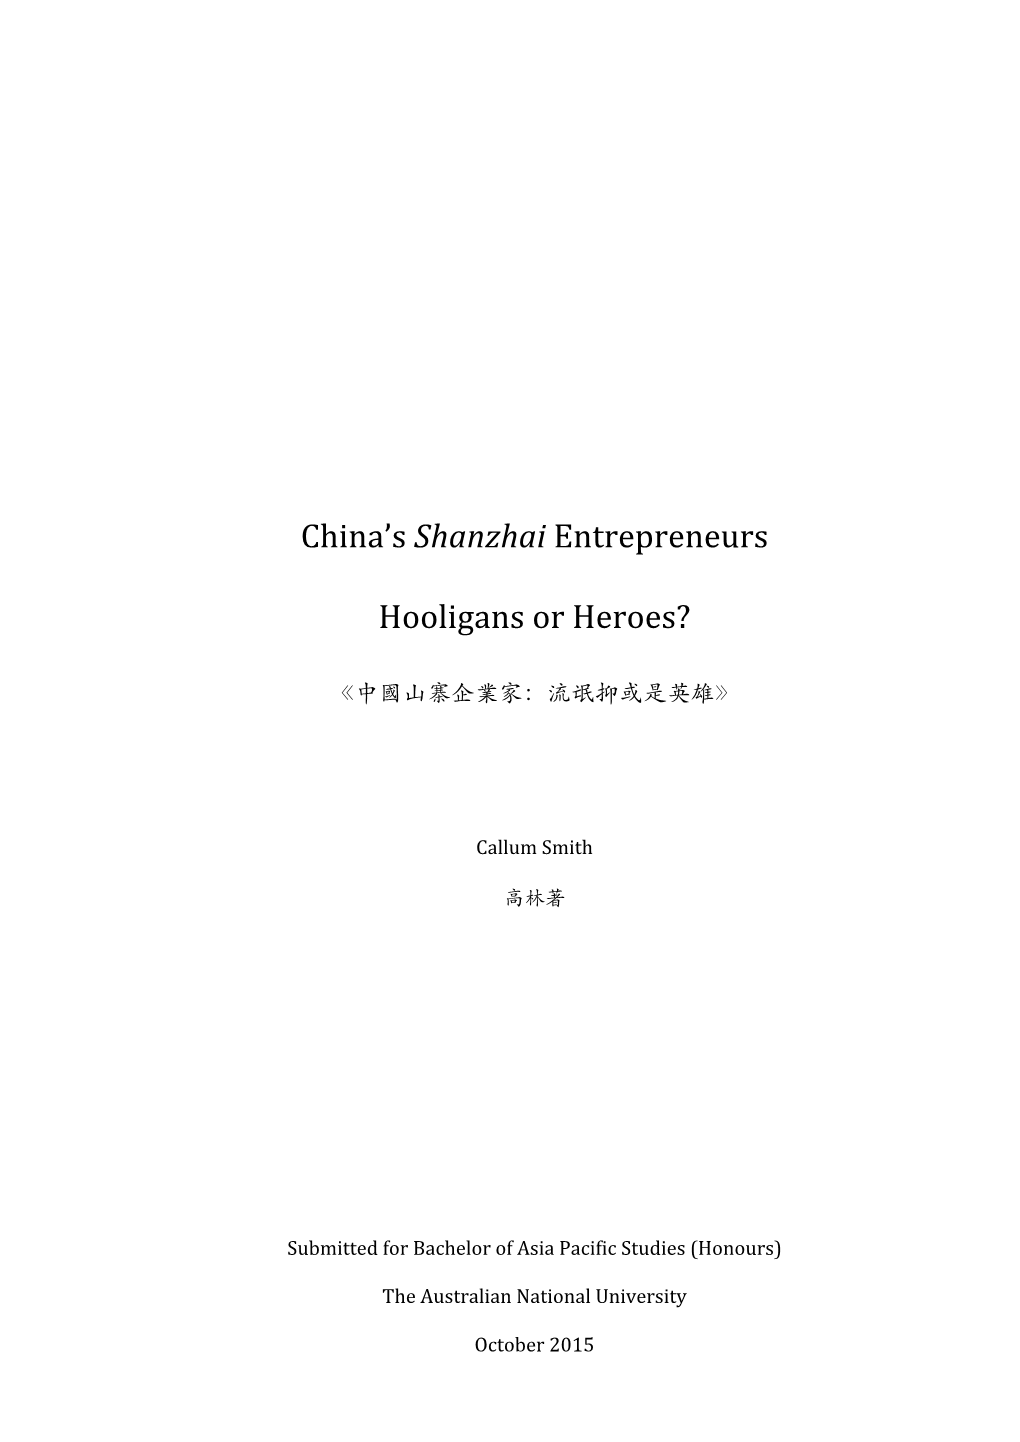 China's Shanzhai Entrepreneurs Hooligans Or